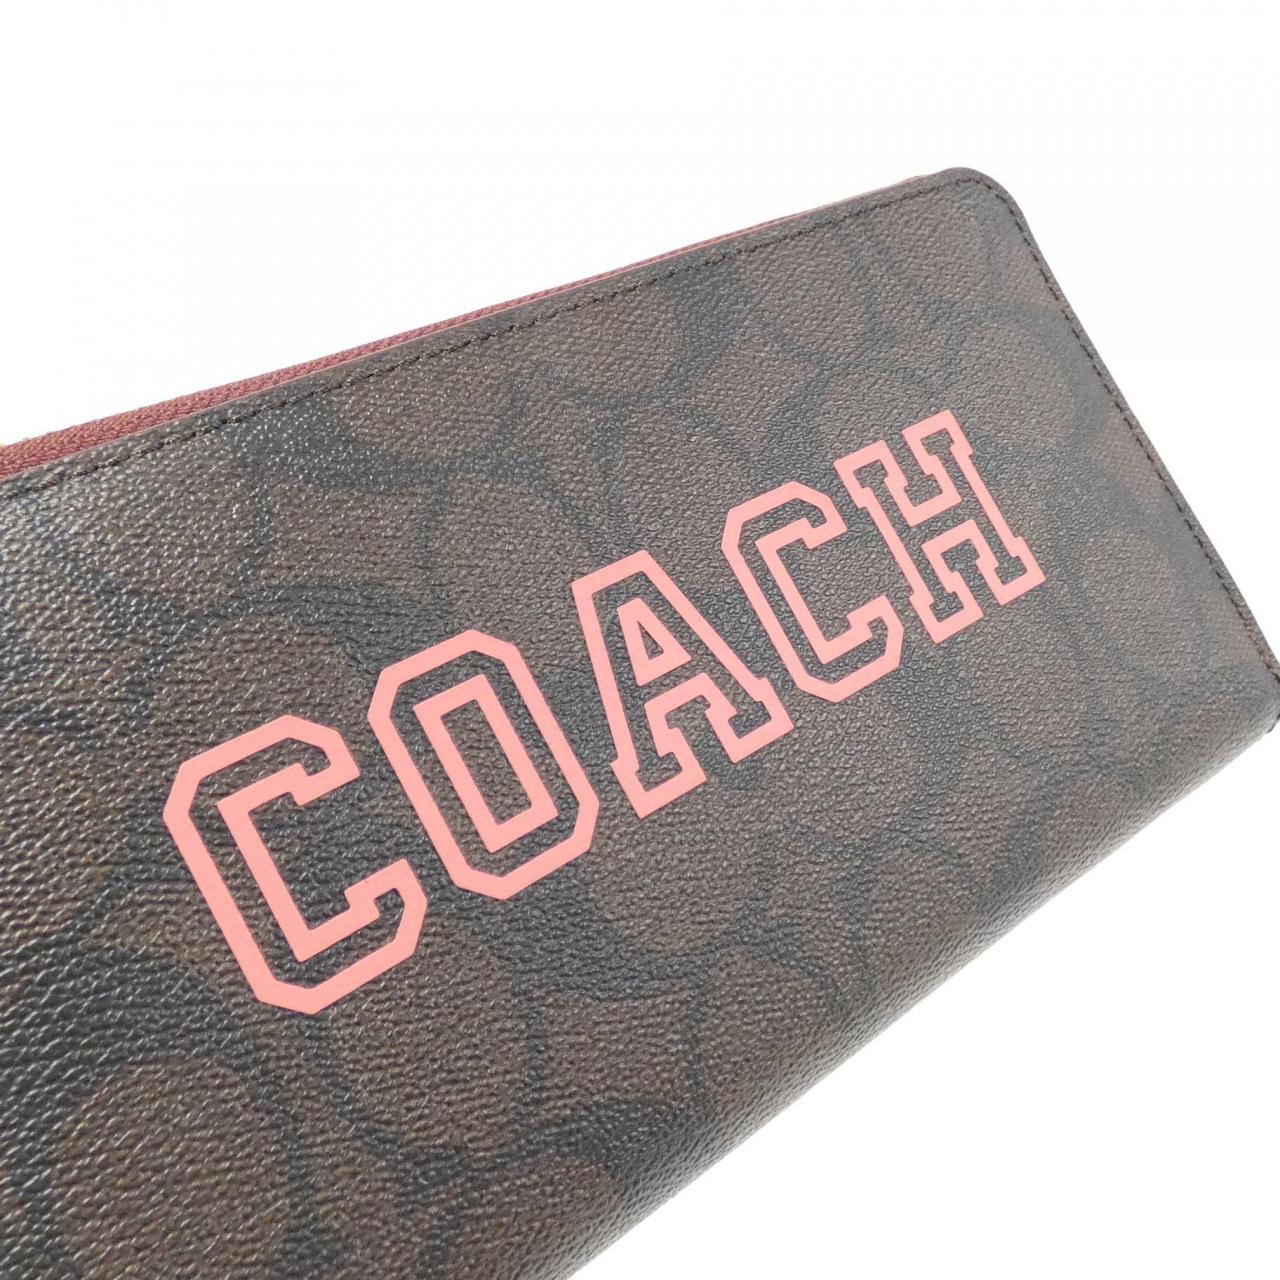 [BRAND NEW] Coach CB856 Wallet